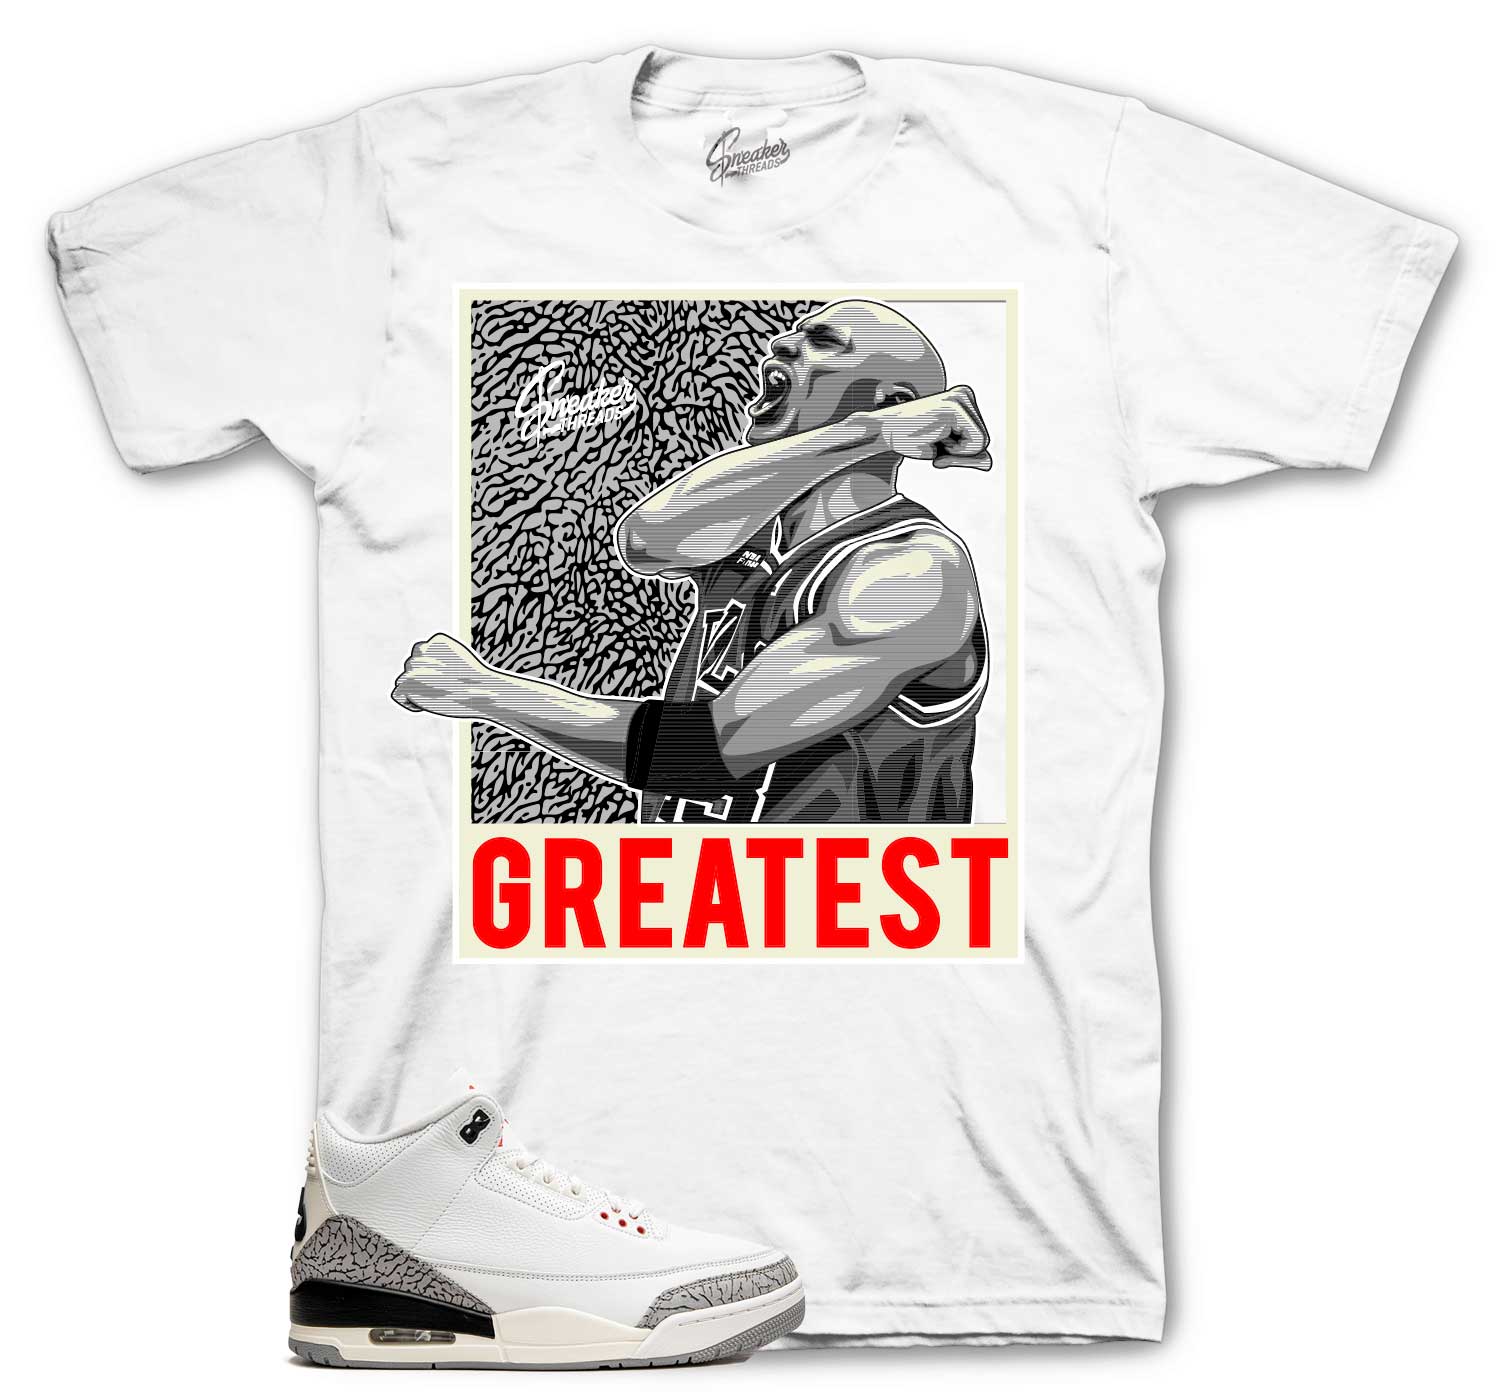 Retro 3 White Cement Reimagined Shirt - Greatest